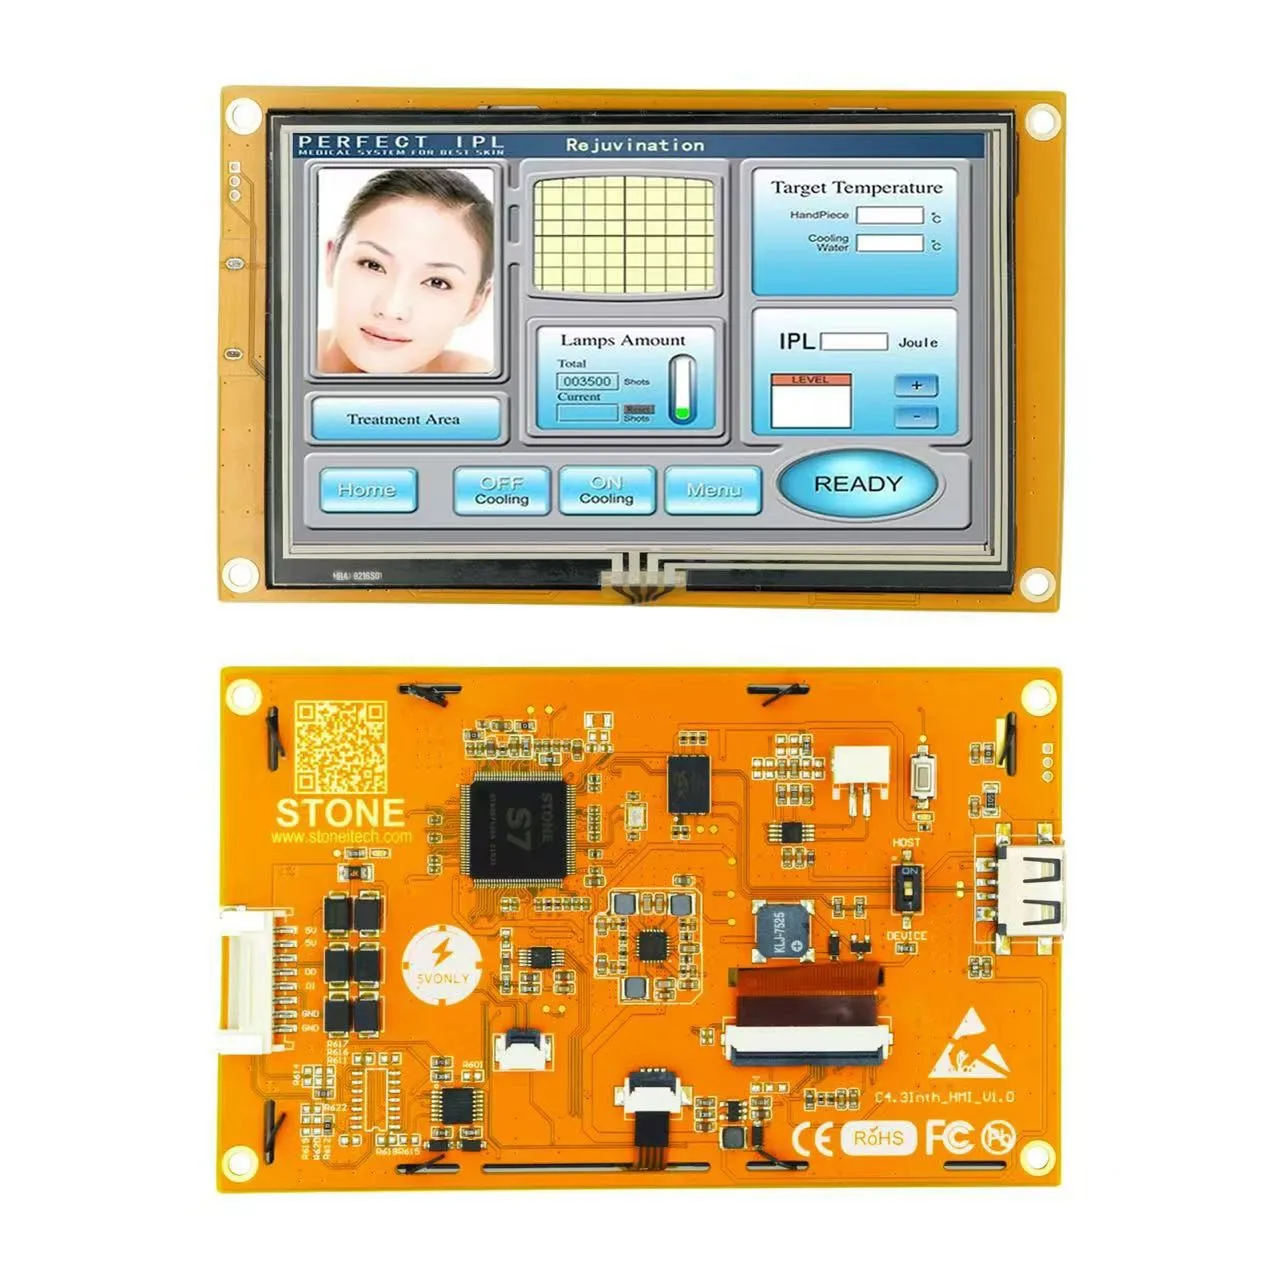 SCBRHMI Enhanced Series HMI RTP LCD Display 4.3'' inch Size 128M-1GB Flash Memory Cortex A8 Touch Display